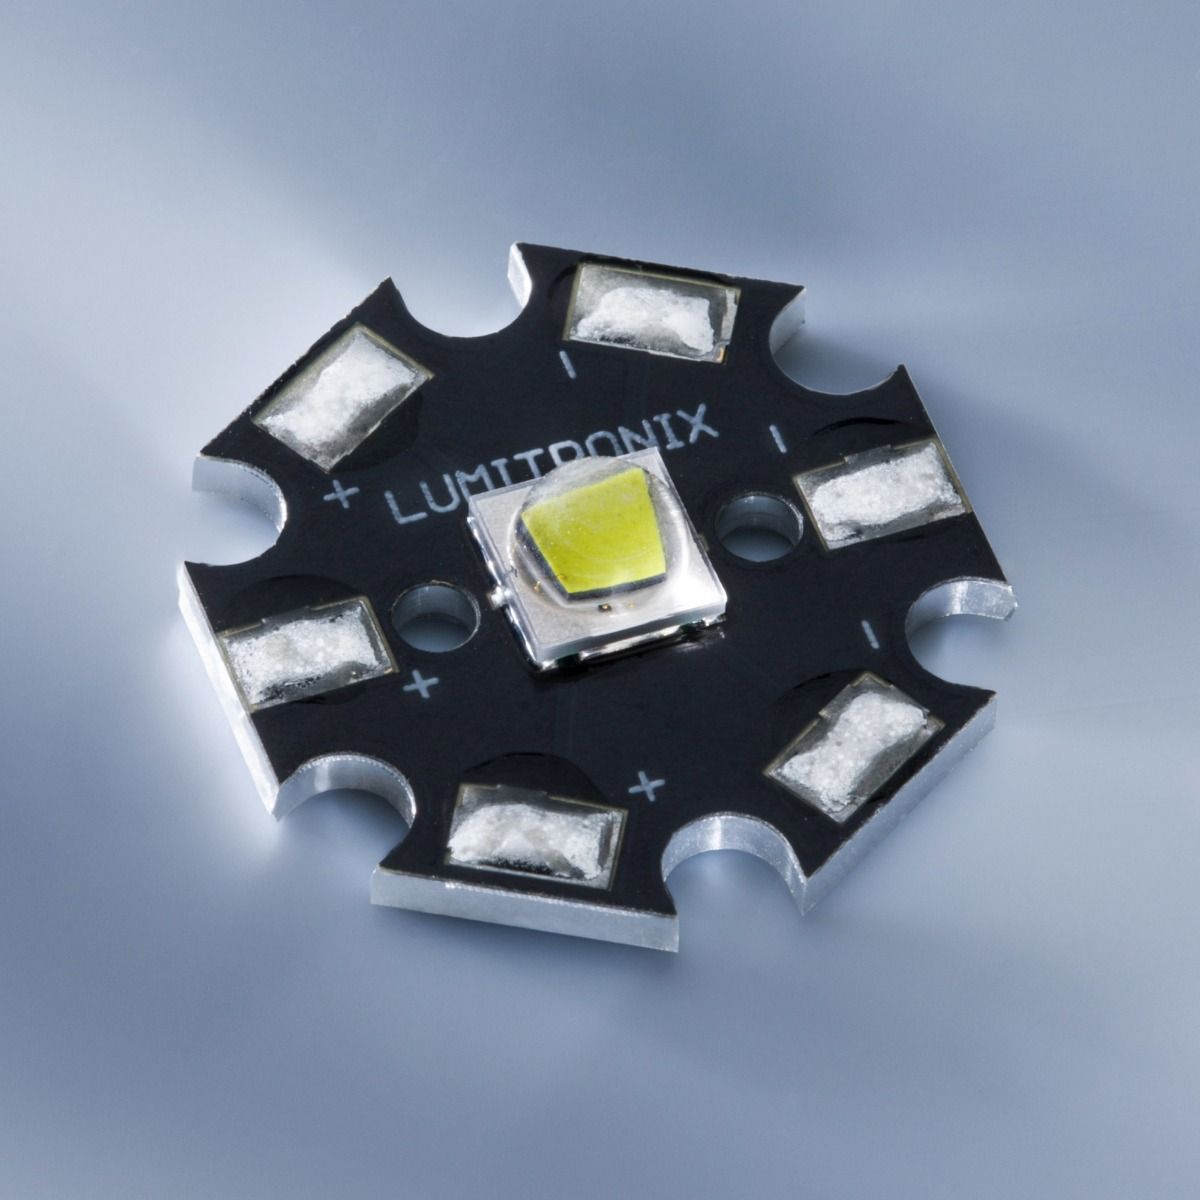 Prestigefyldte disk Erobrer Lumistrips Cree XM-L 2 U2, white LED, 1198 lm XMLBWT-00-0000-0000U2051 Star  PCB|68632